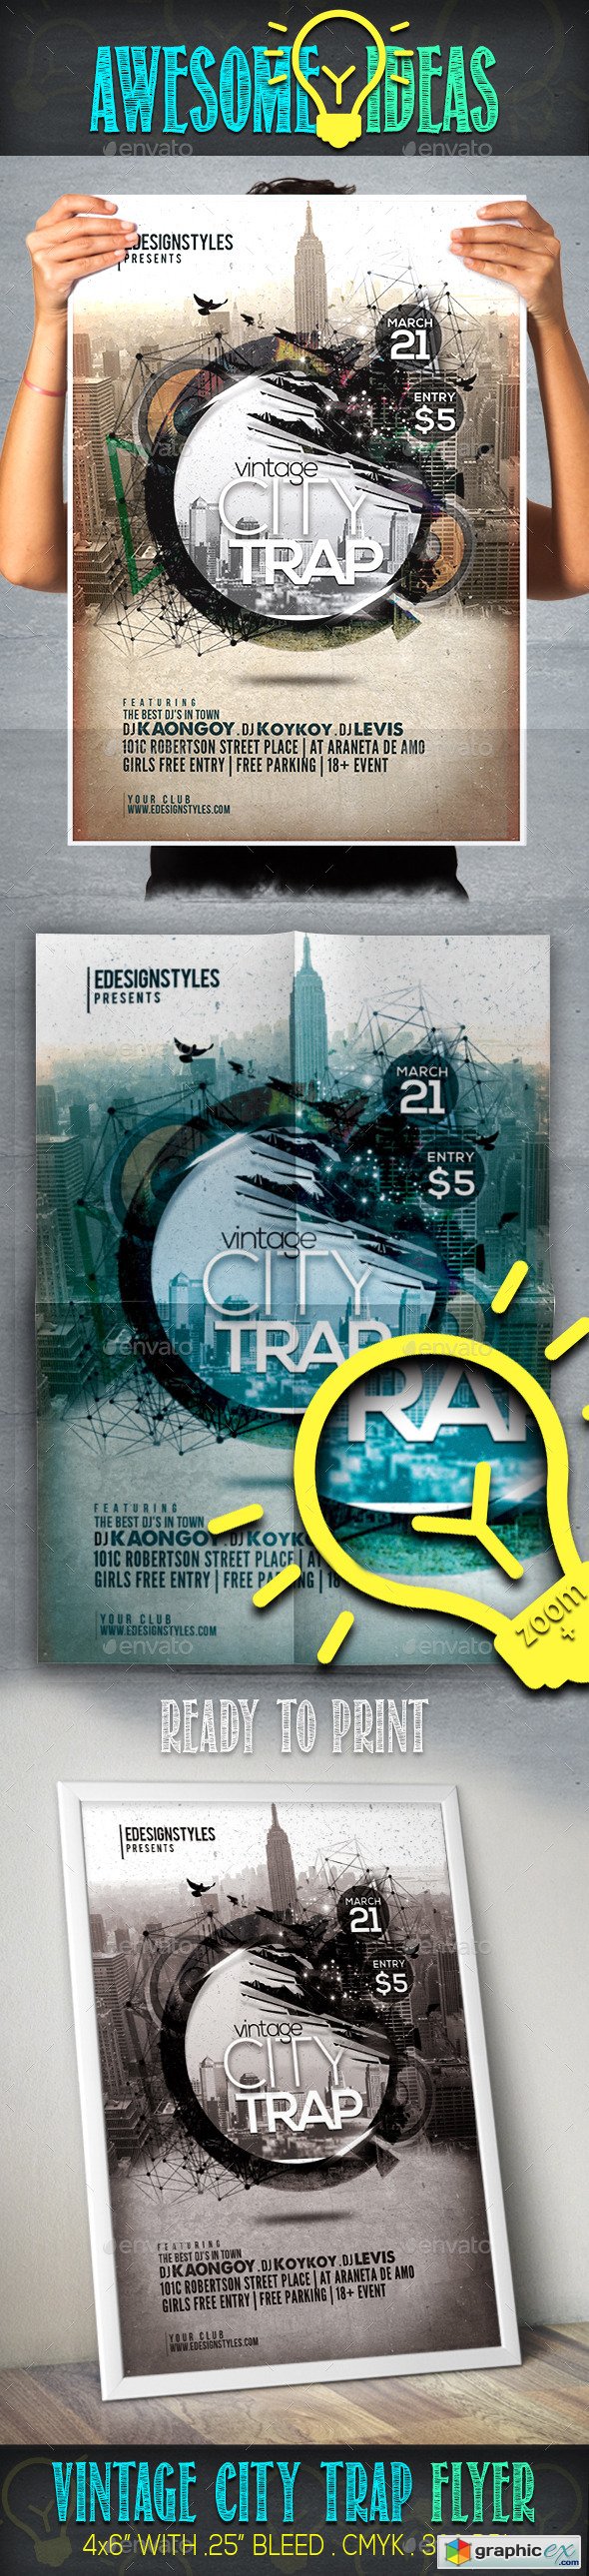 VIntage City Trap Flyer